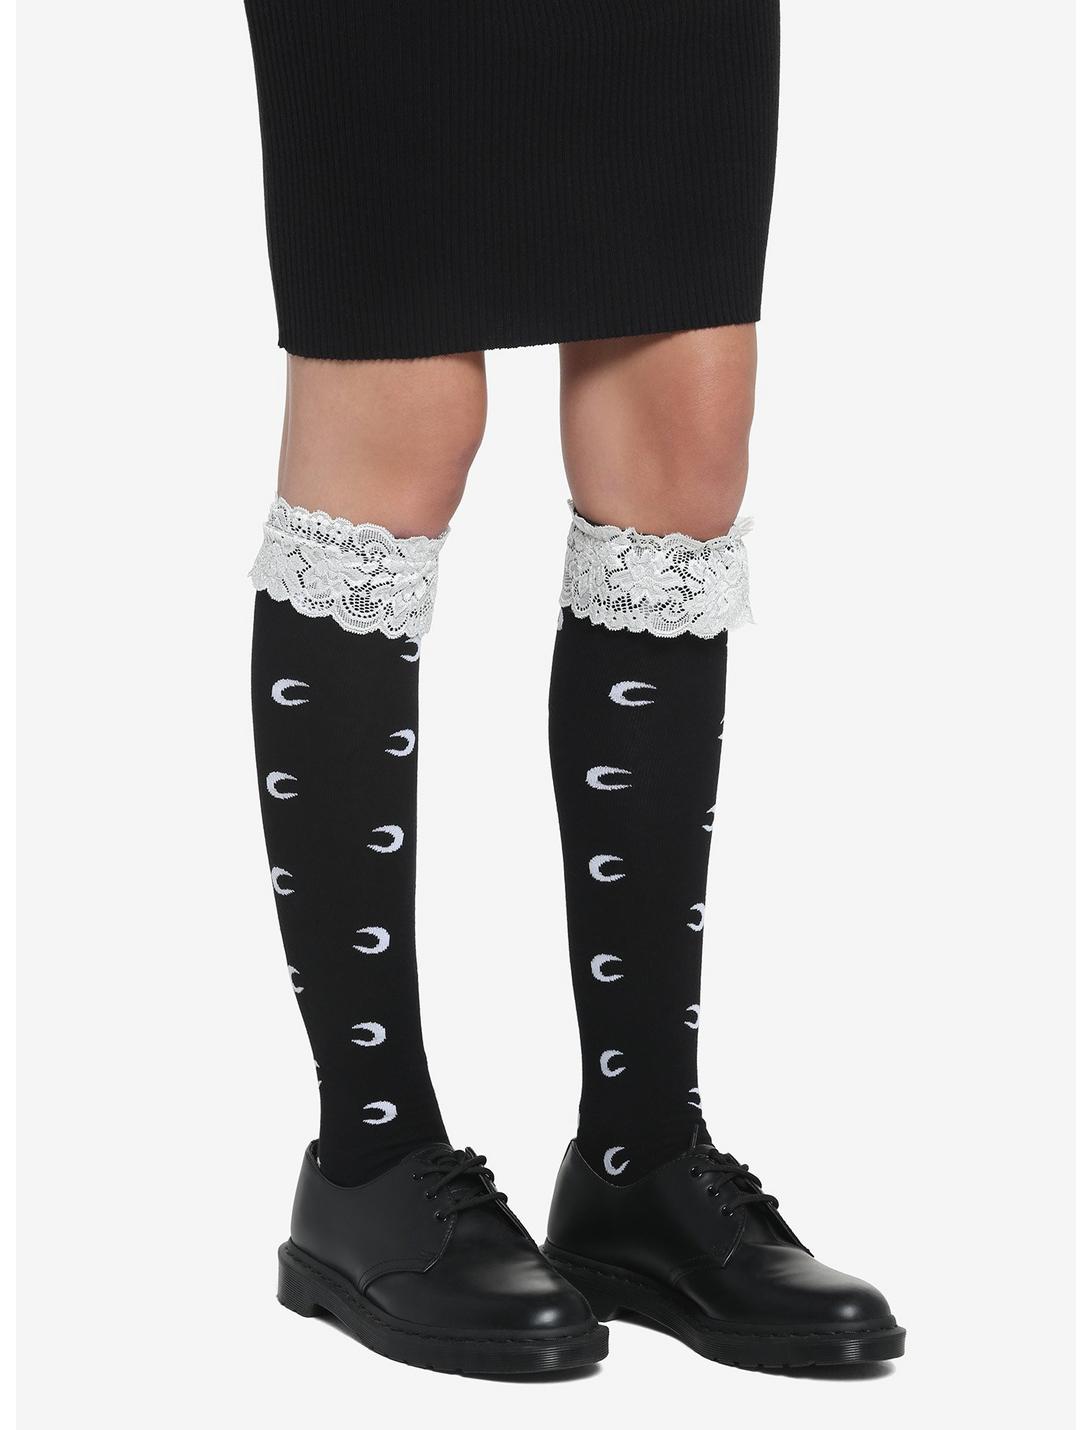 Crescent Moon Lace Ruffle Knee-High Socks, , hi-res